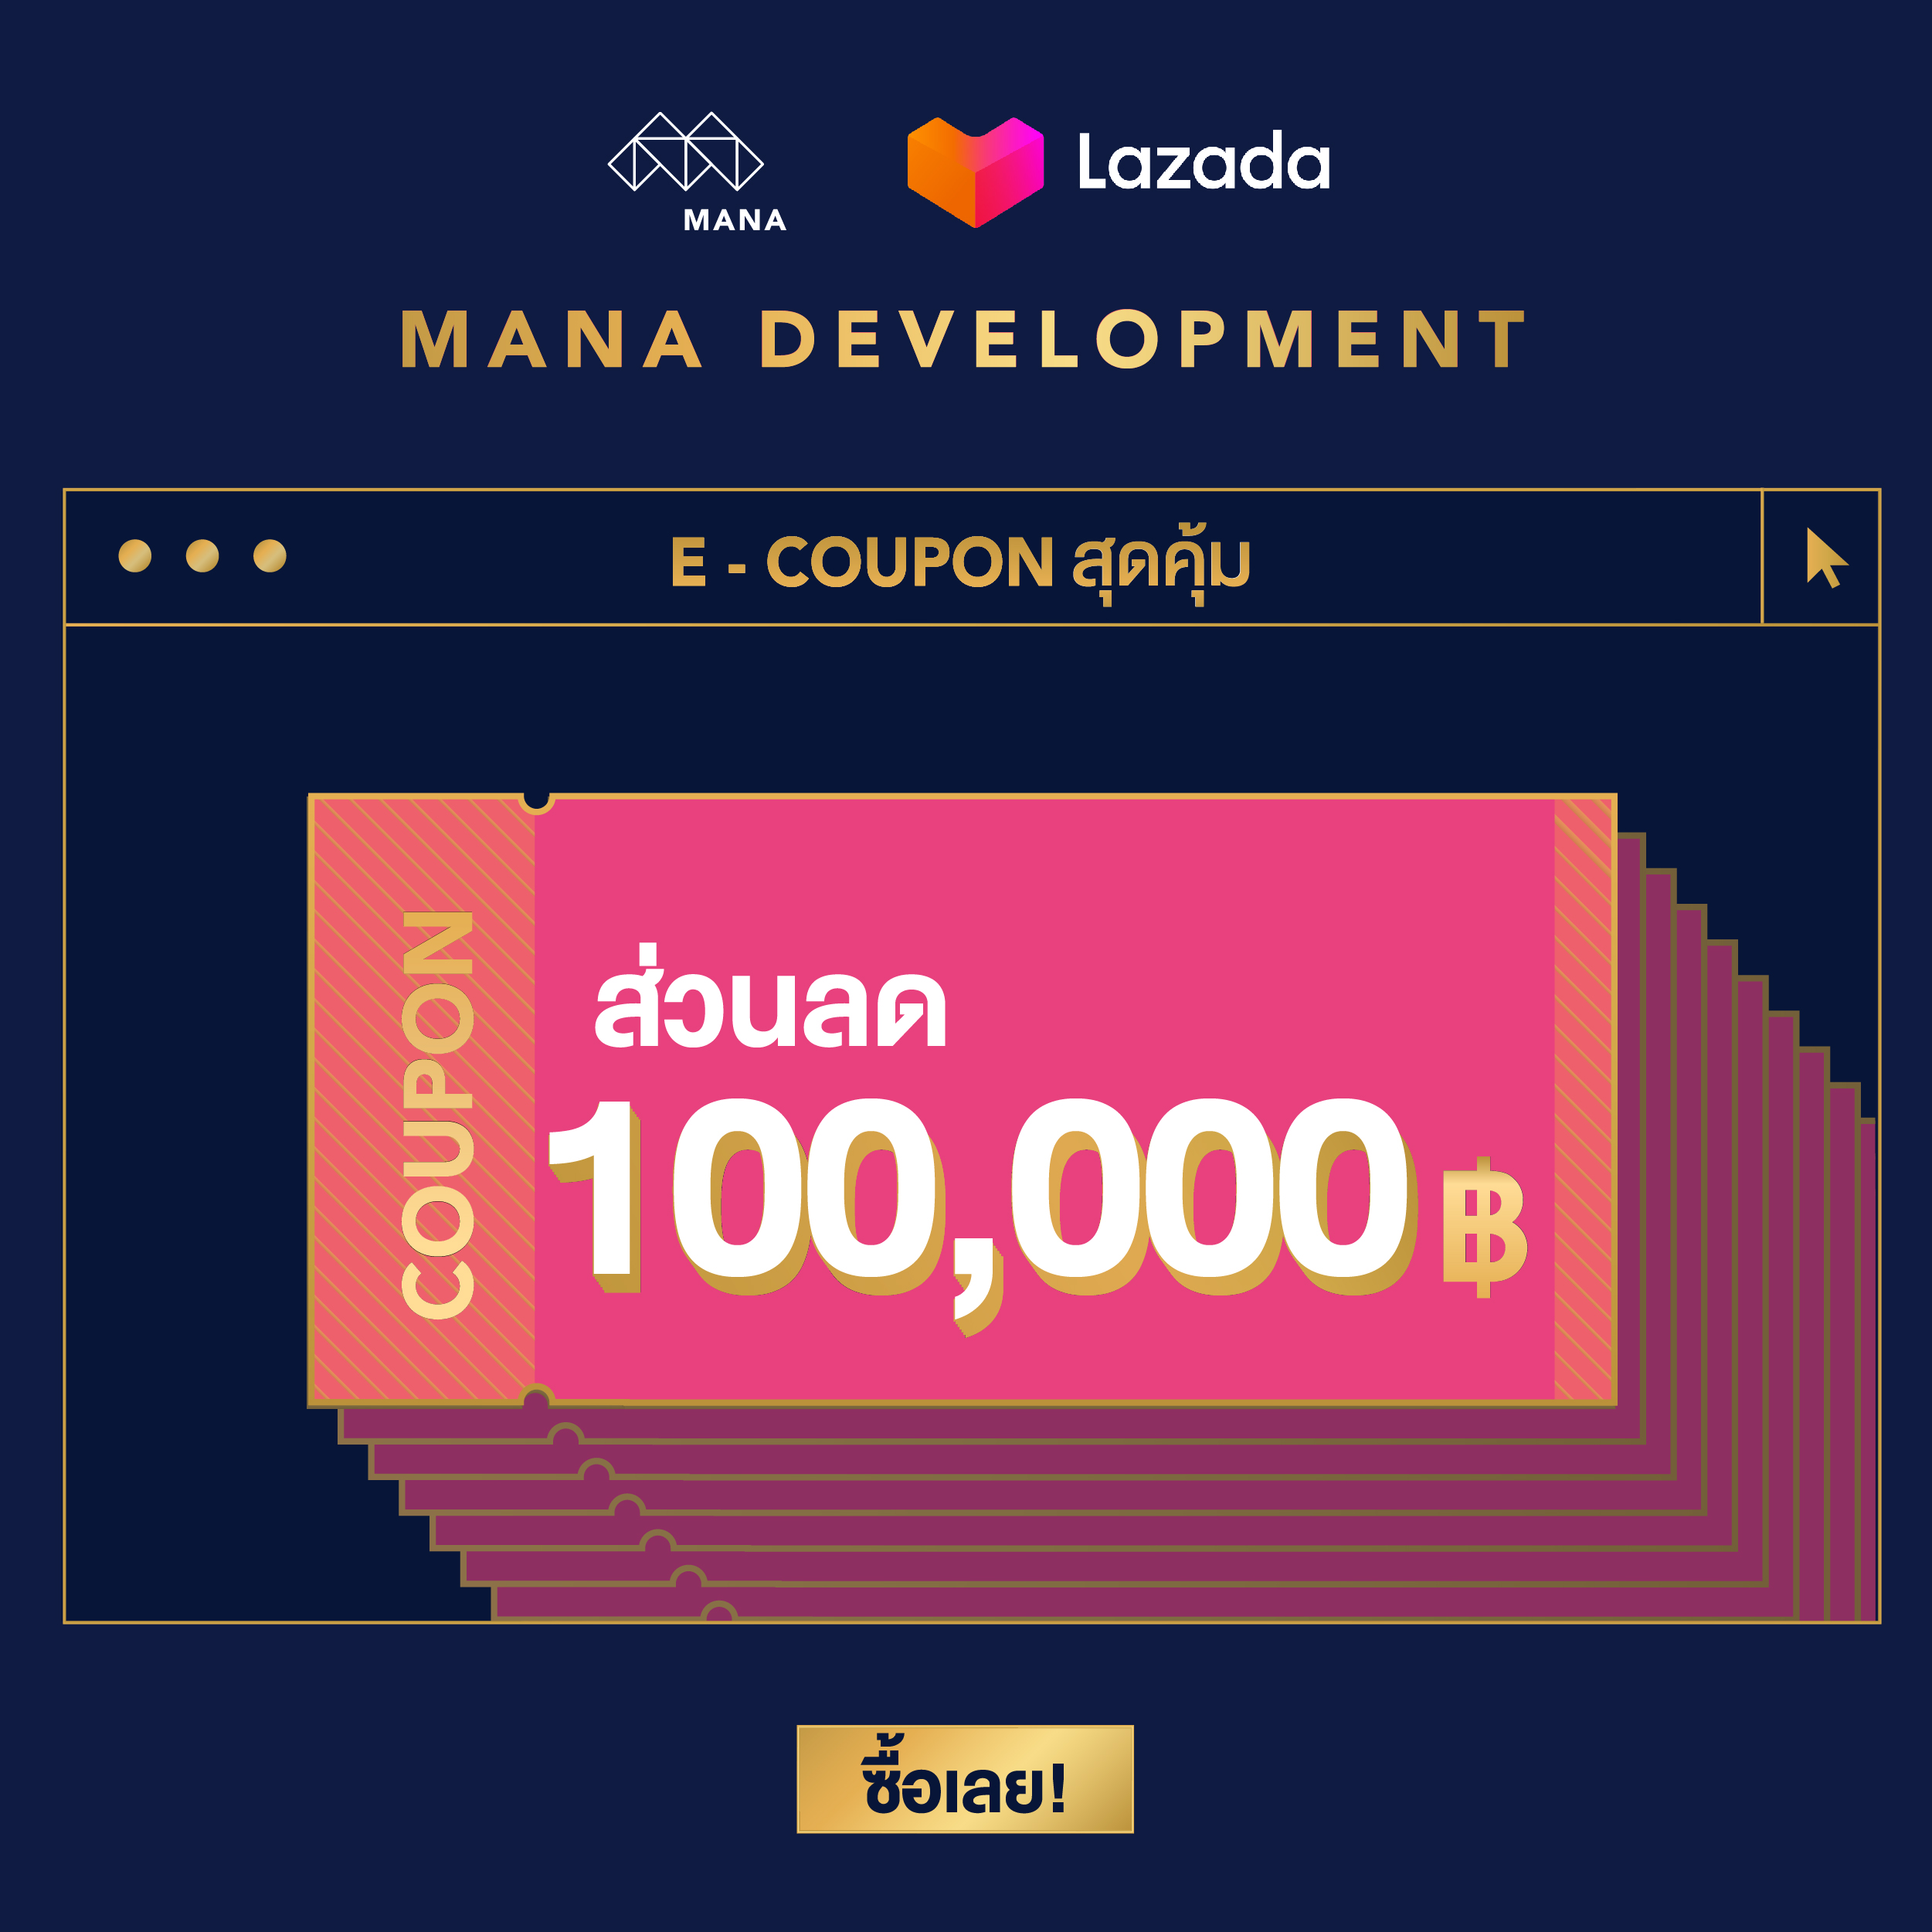 E-Voucher MANA Development - คูปองส่วนลดโครงการเอสเพน คอนโด ราคา 100 บาท ใช้เป็นส่วนลด 100,000 บาท [จัดส่งทาง Email]